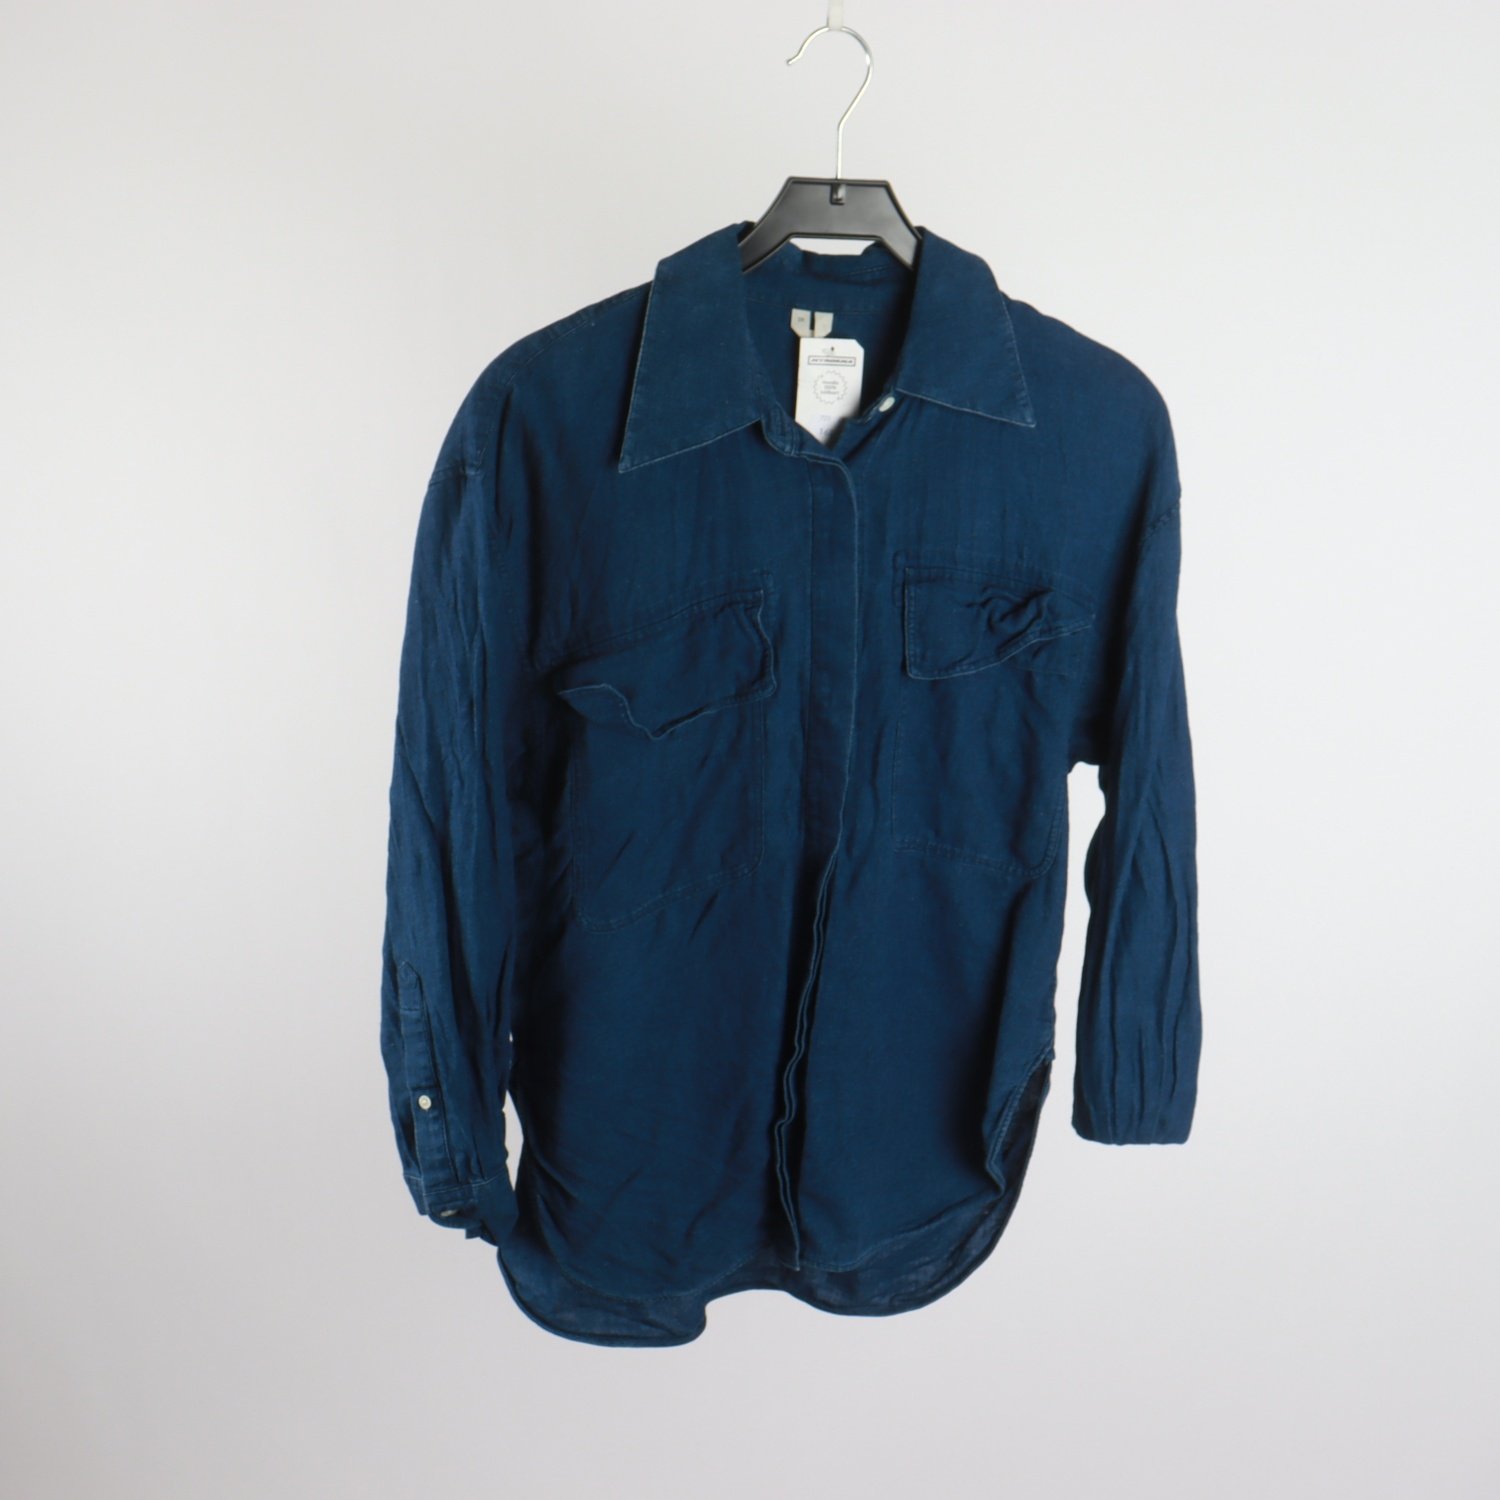 Jeansskjorta, Arket, blå, stl. 36